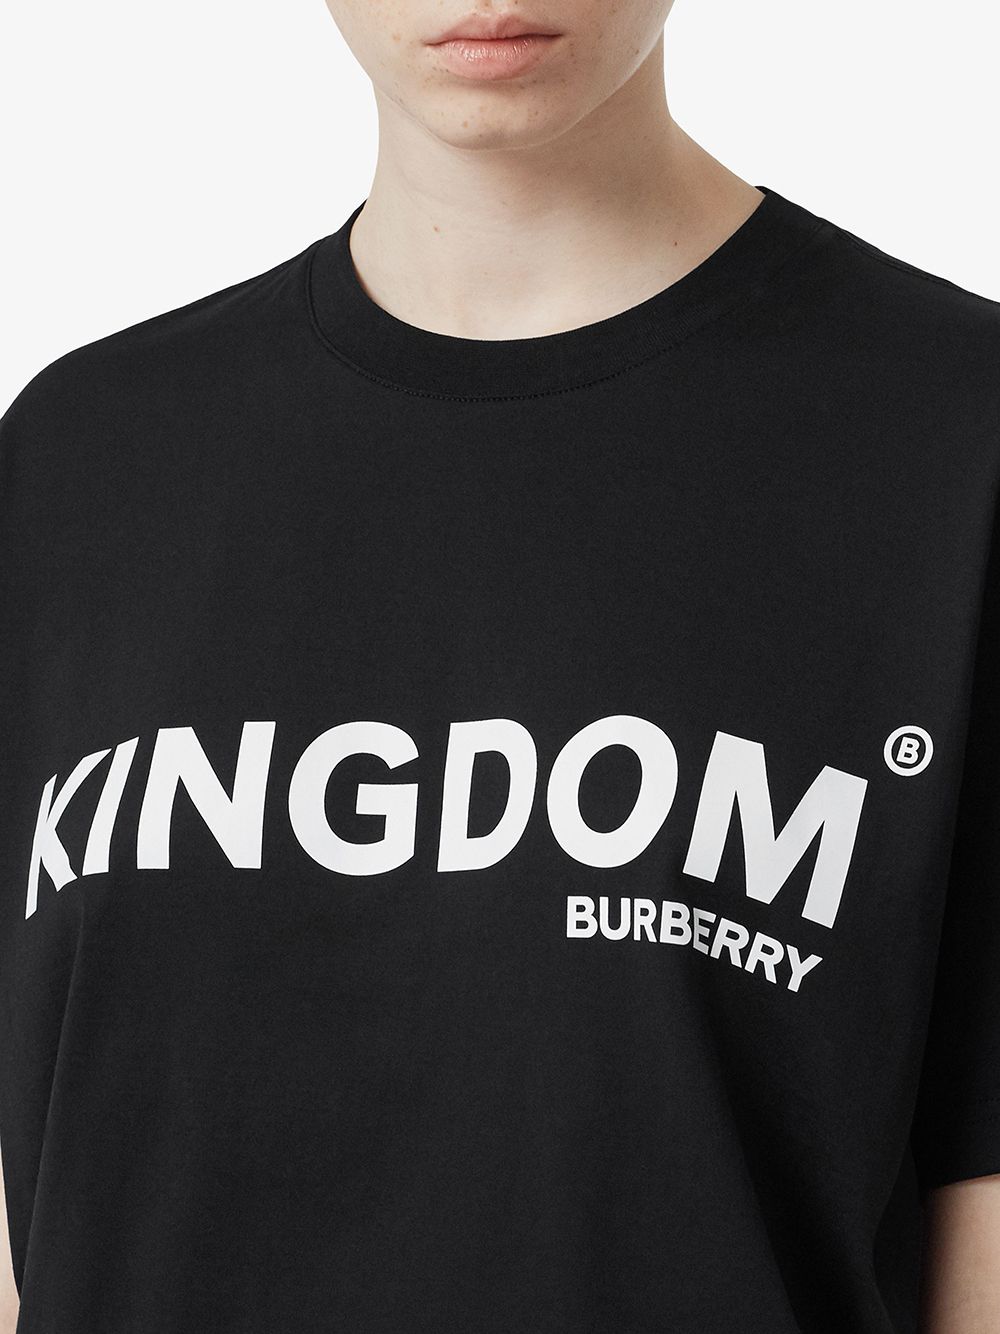 kingdom burberry